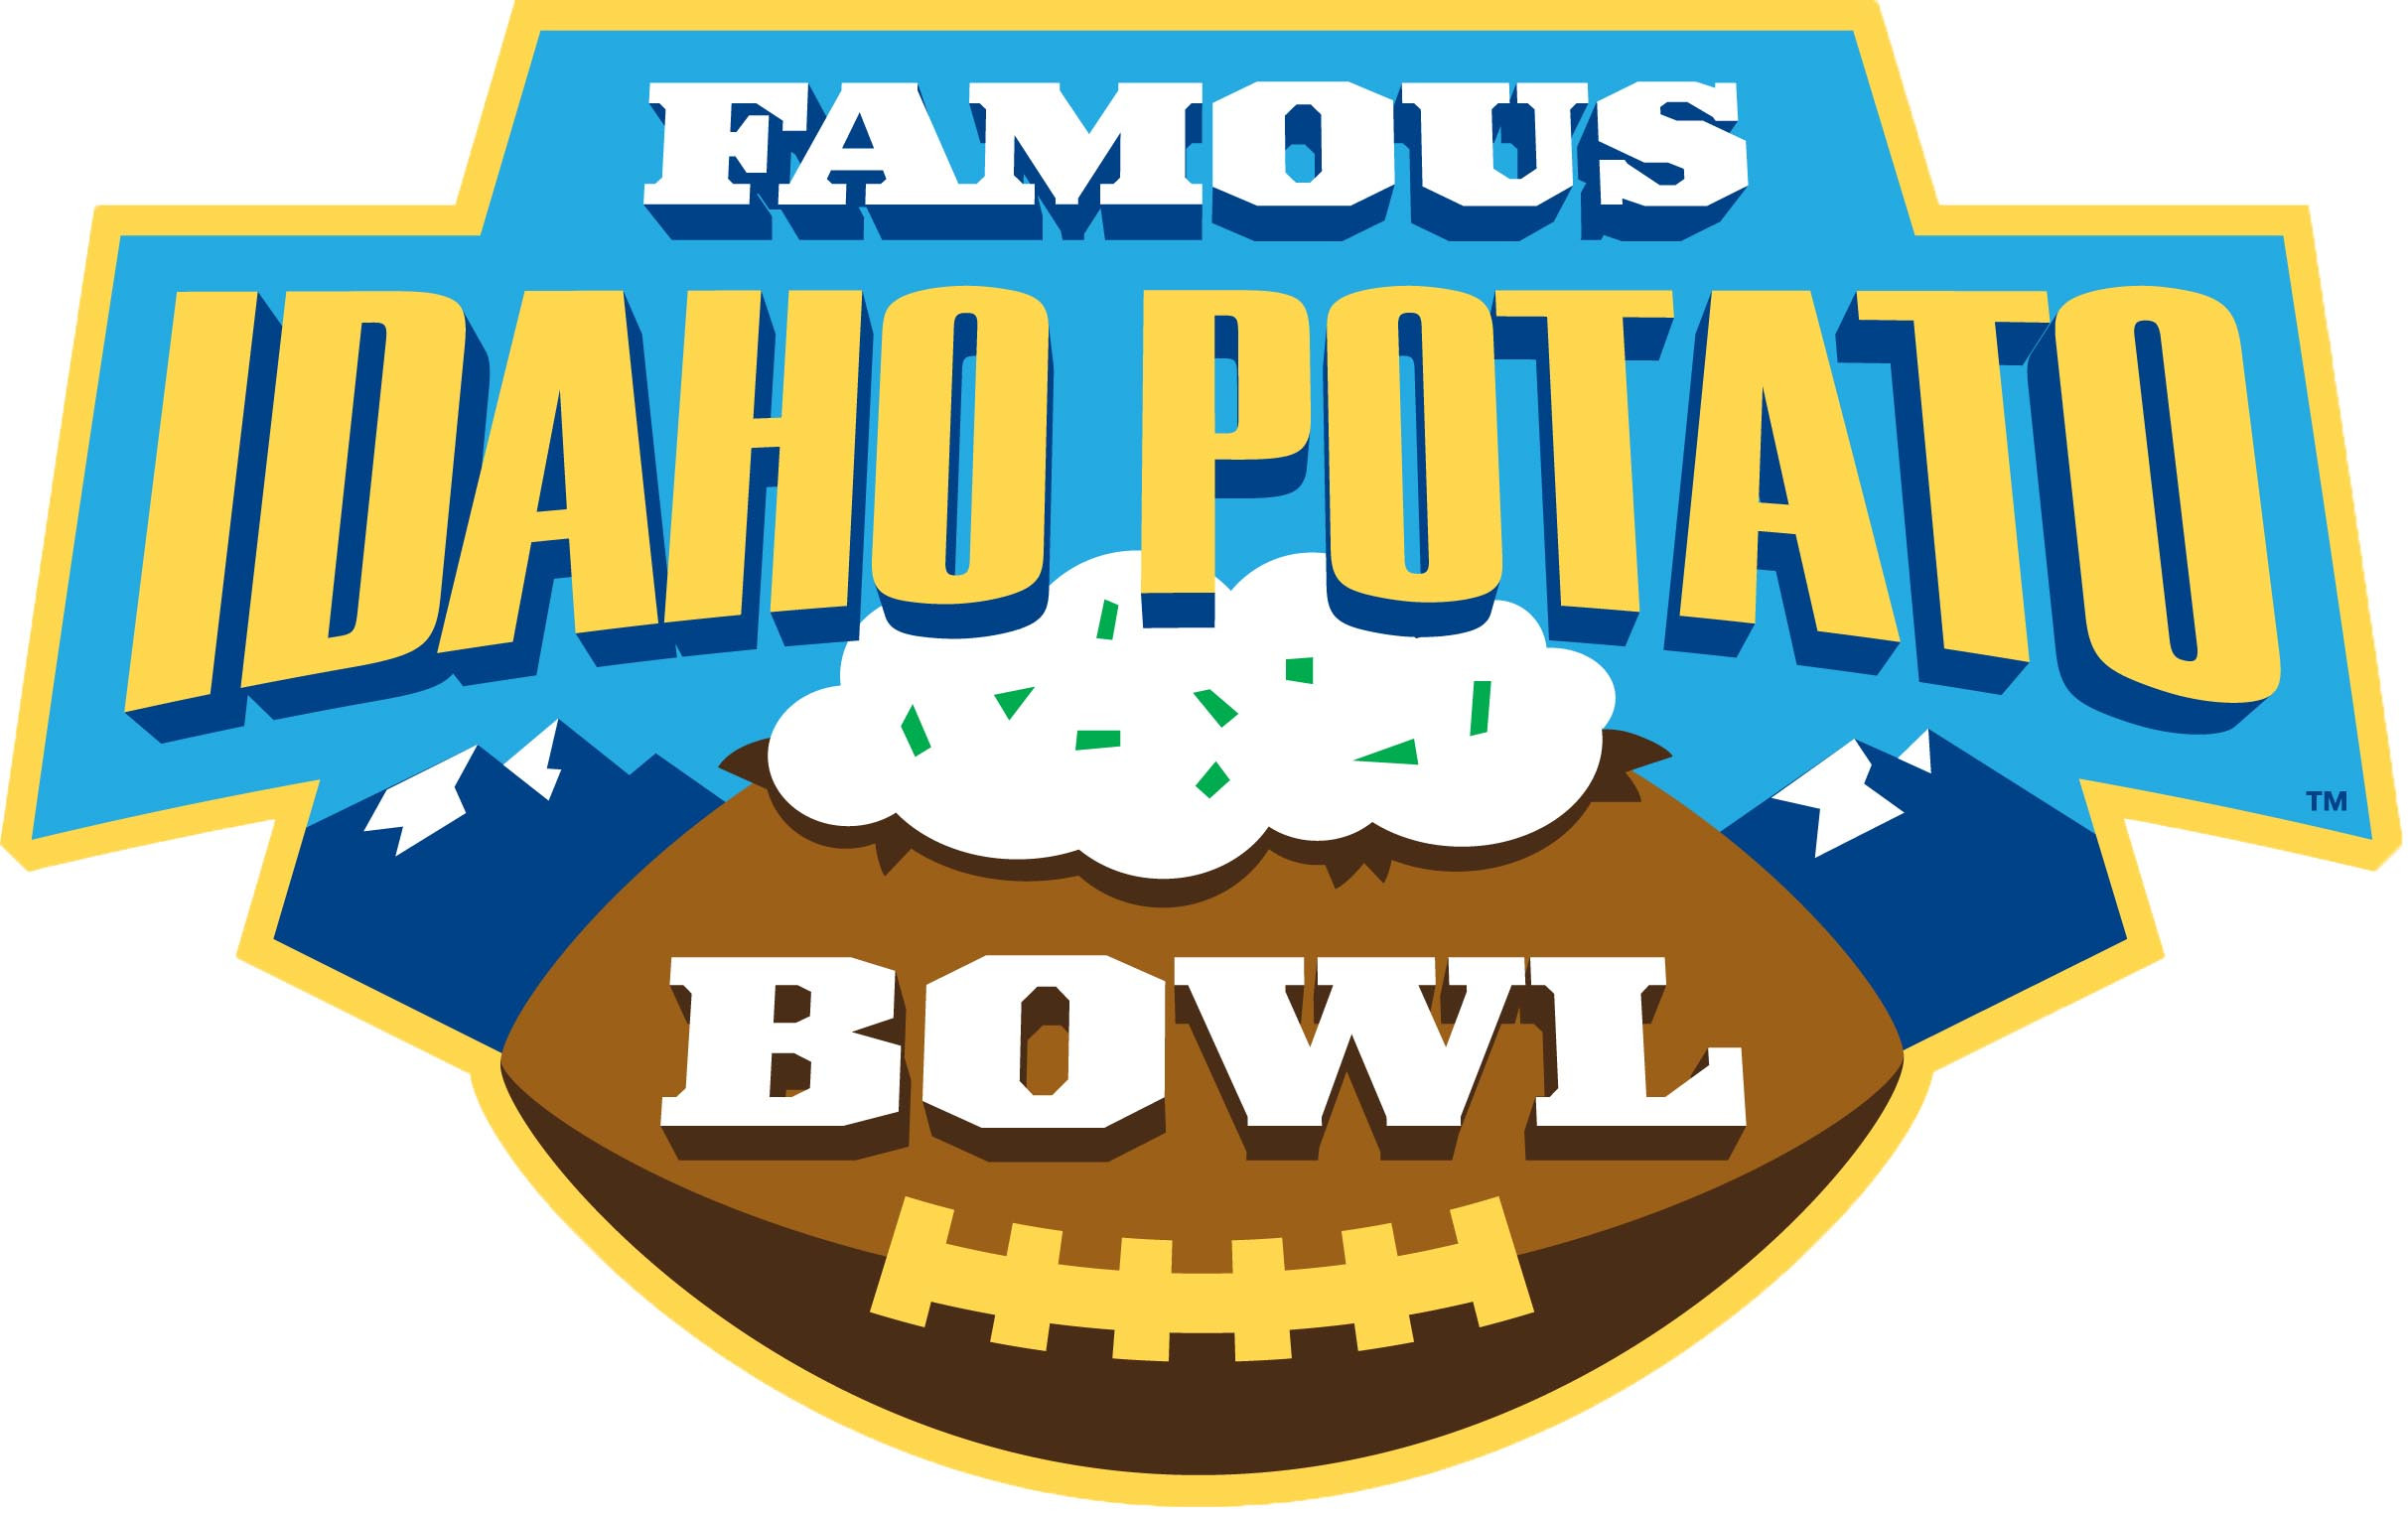 Idaho Potato Bowl
 ESPN Regional Television Acquires Famous Idaho Potato Bowl